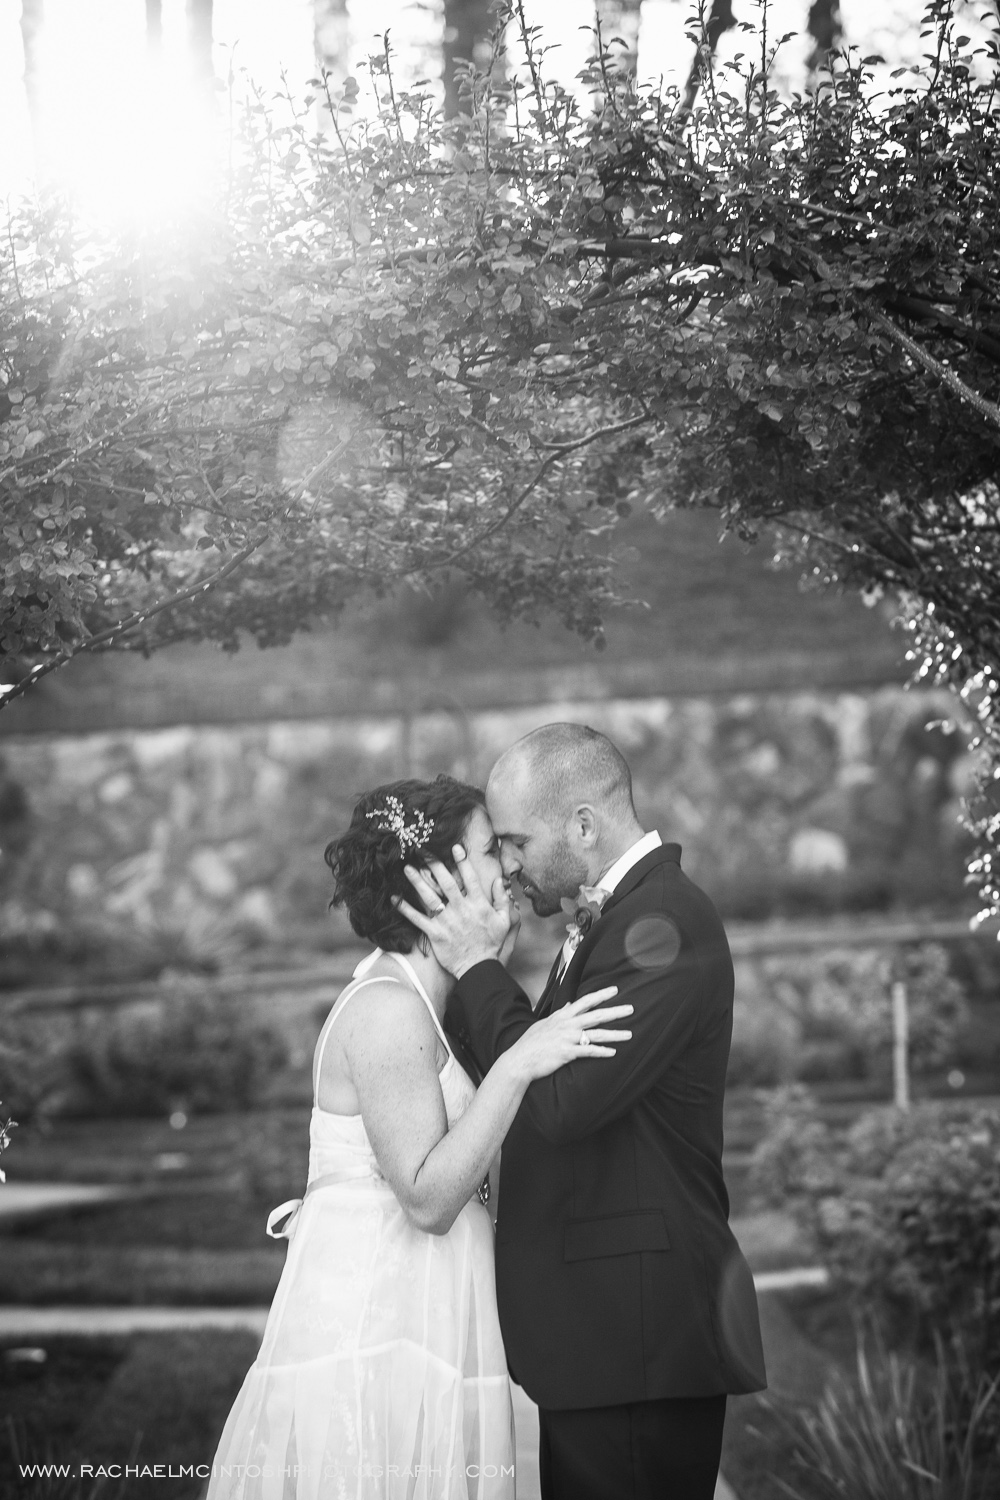 Asheville Wedding Photographer -2014 in review-21.jpg